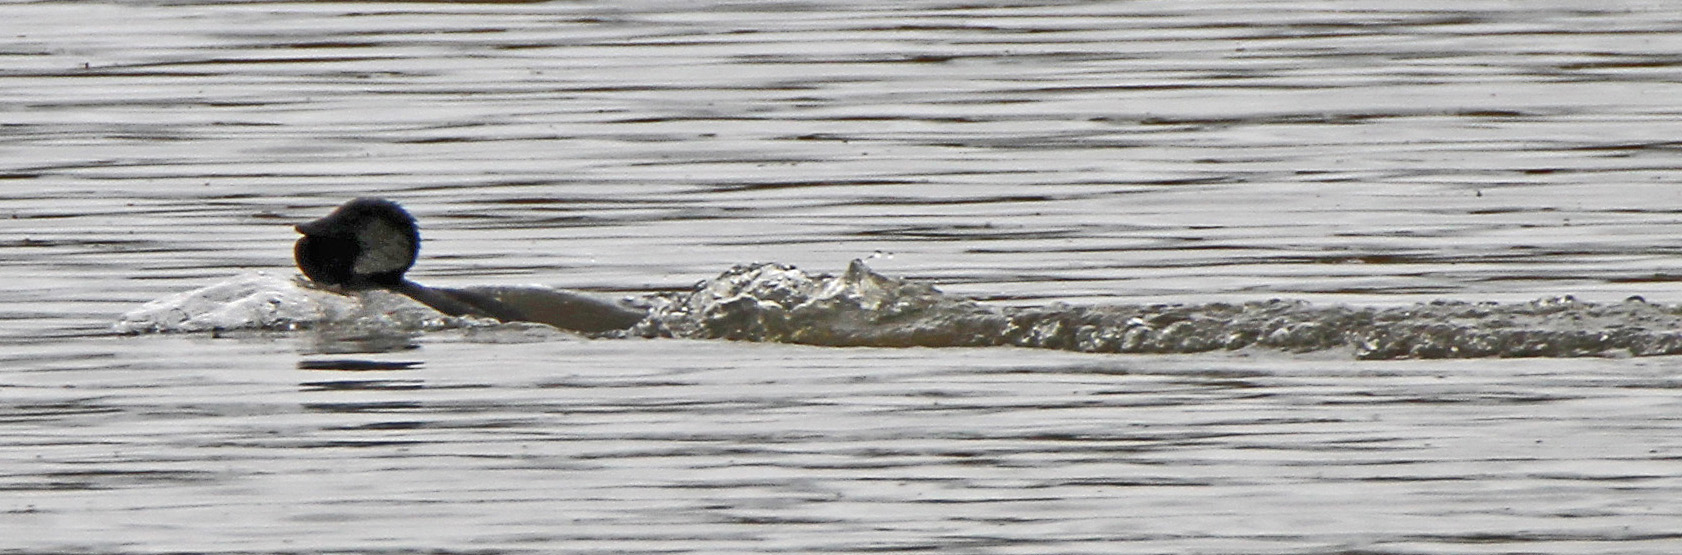 Photograph of Male Musk Duck "steaming" across Beardy Waters